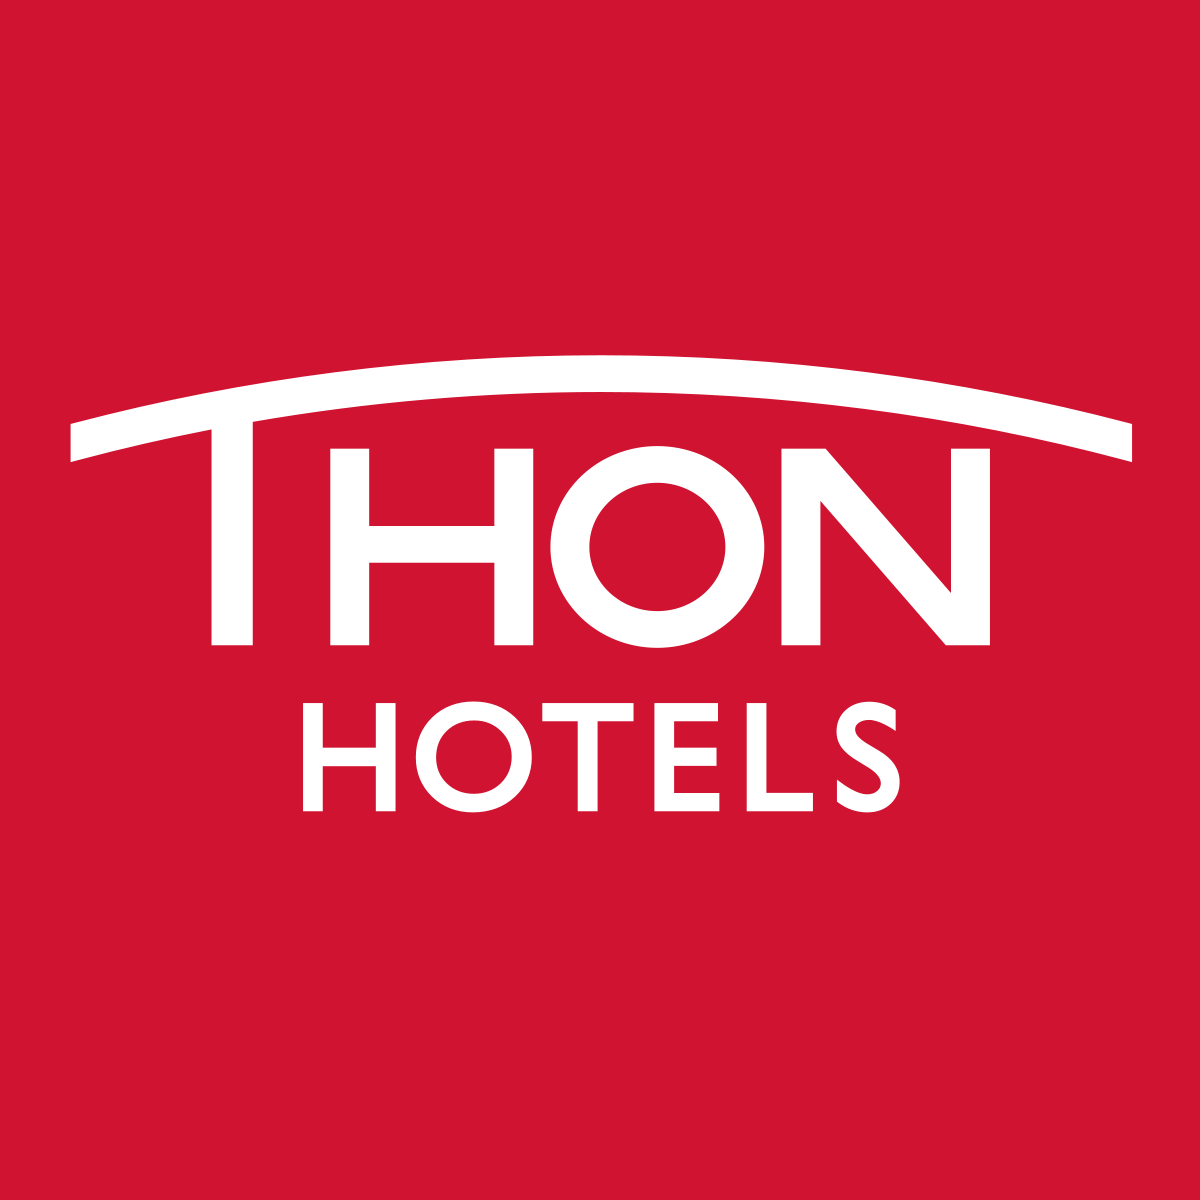 Thon Logo - Logo Thon Hotels - TEDxBergen 2018